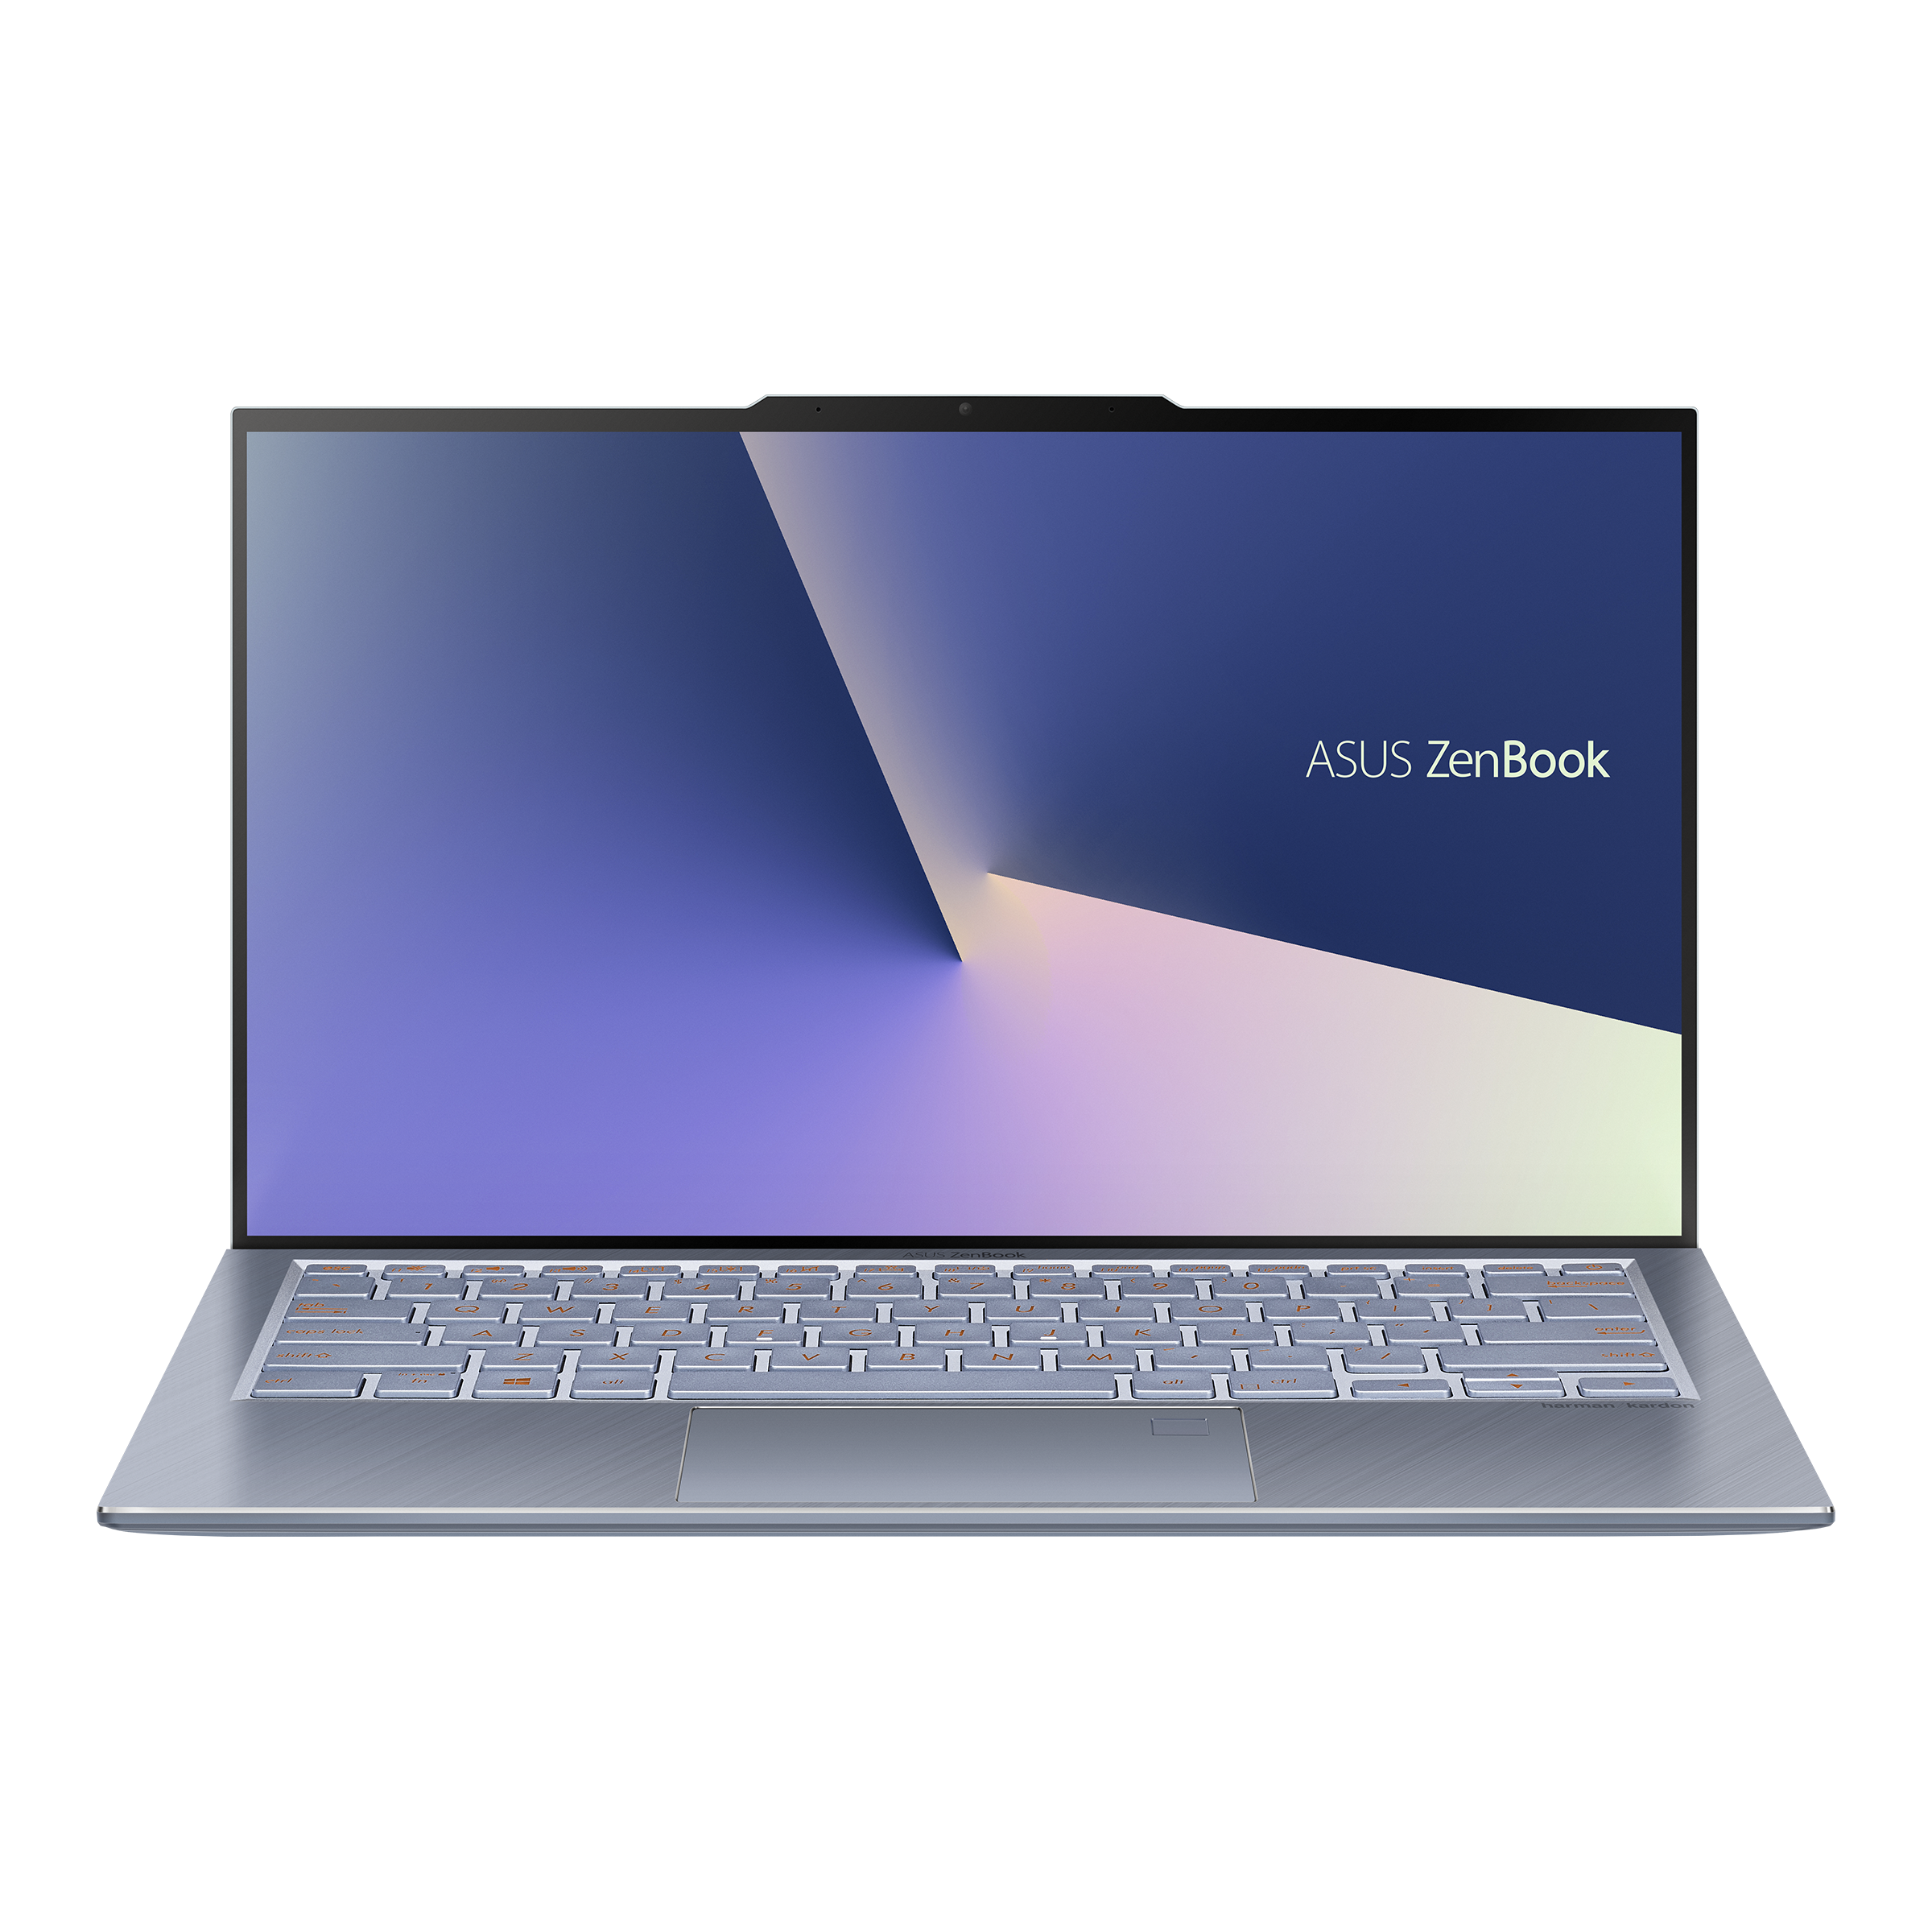 ASUS ZenBook S13 UX392 | Laptop | ASUS UAE